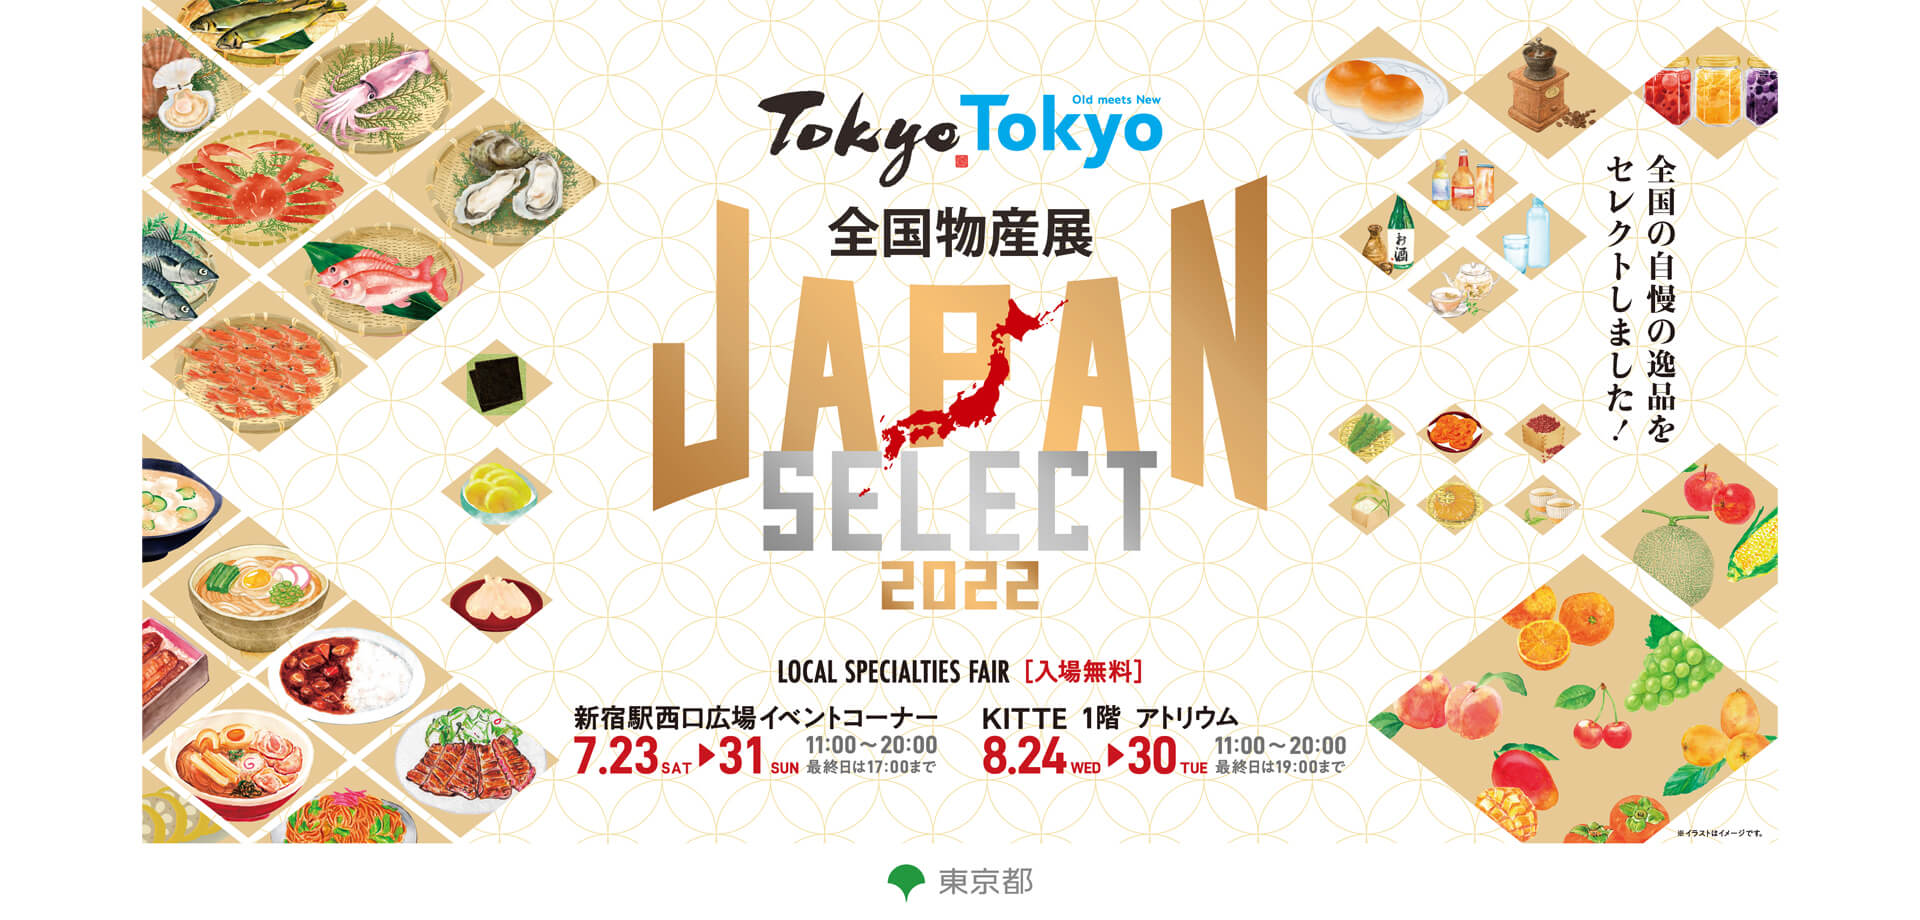 Tokyo Tokyo 全国物産展 JAPAN SELECT 2022